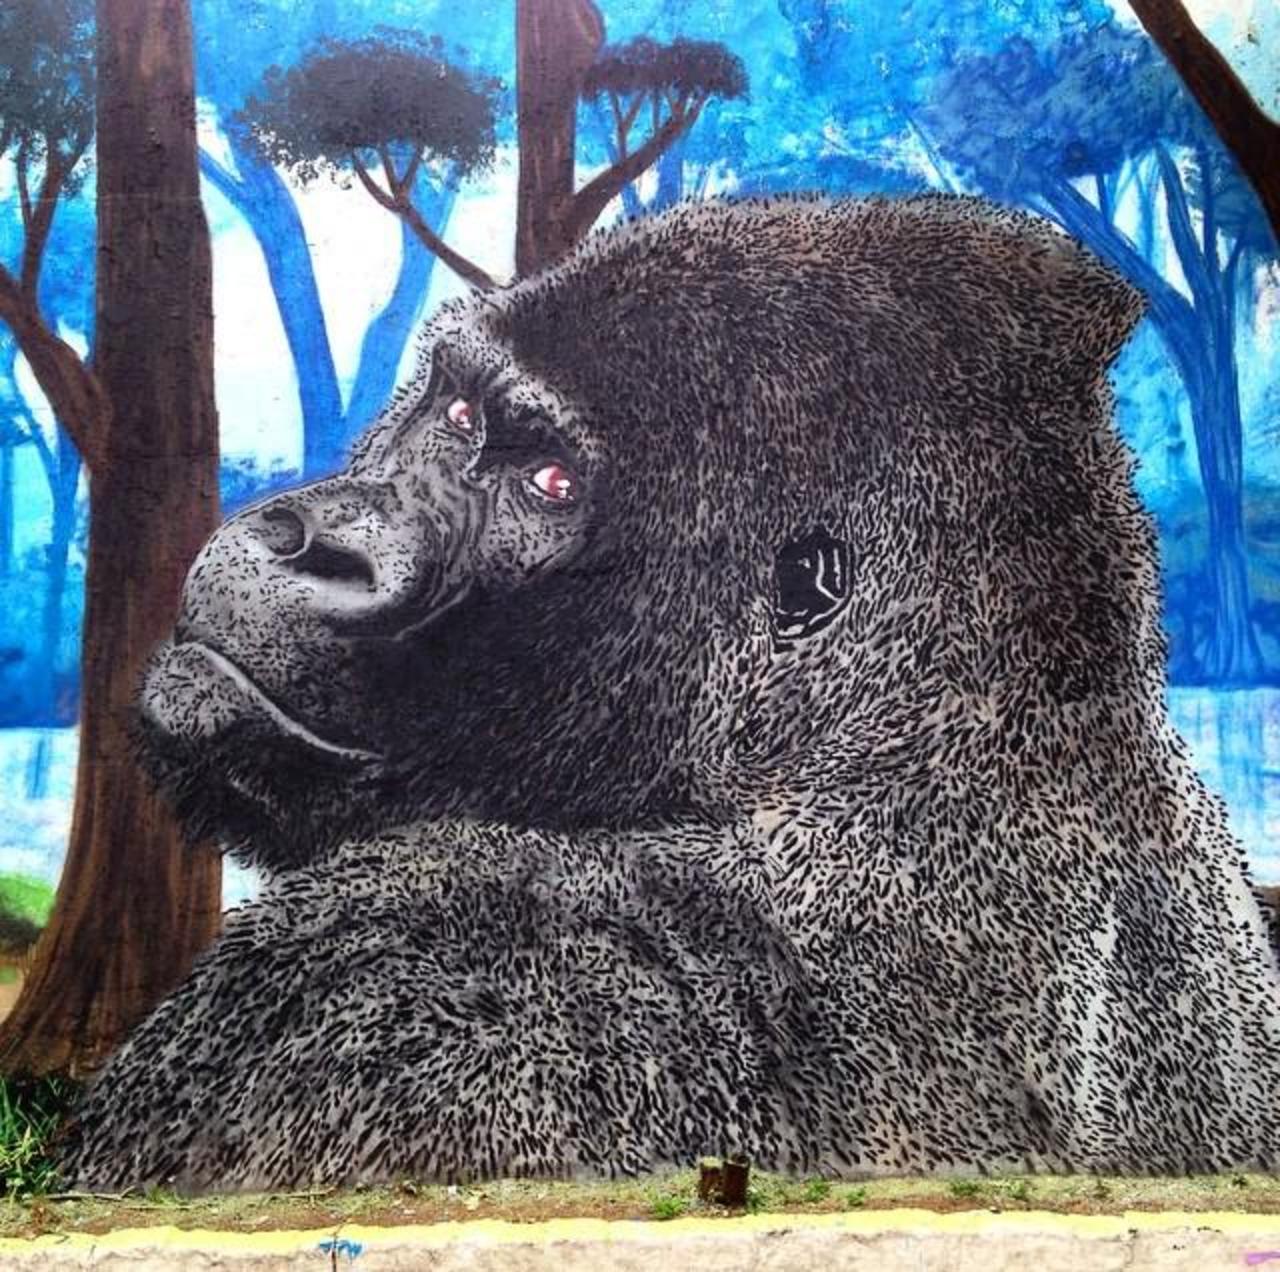 Superb Nature in Street Art piece by Thassio in São Paulo, Brazil  

#art #mural #graffiti #streetart http://t.co/rQlvASST8j